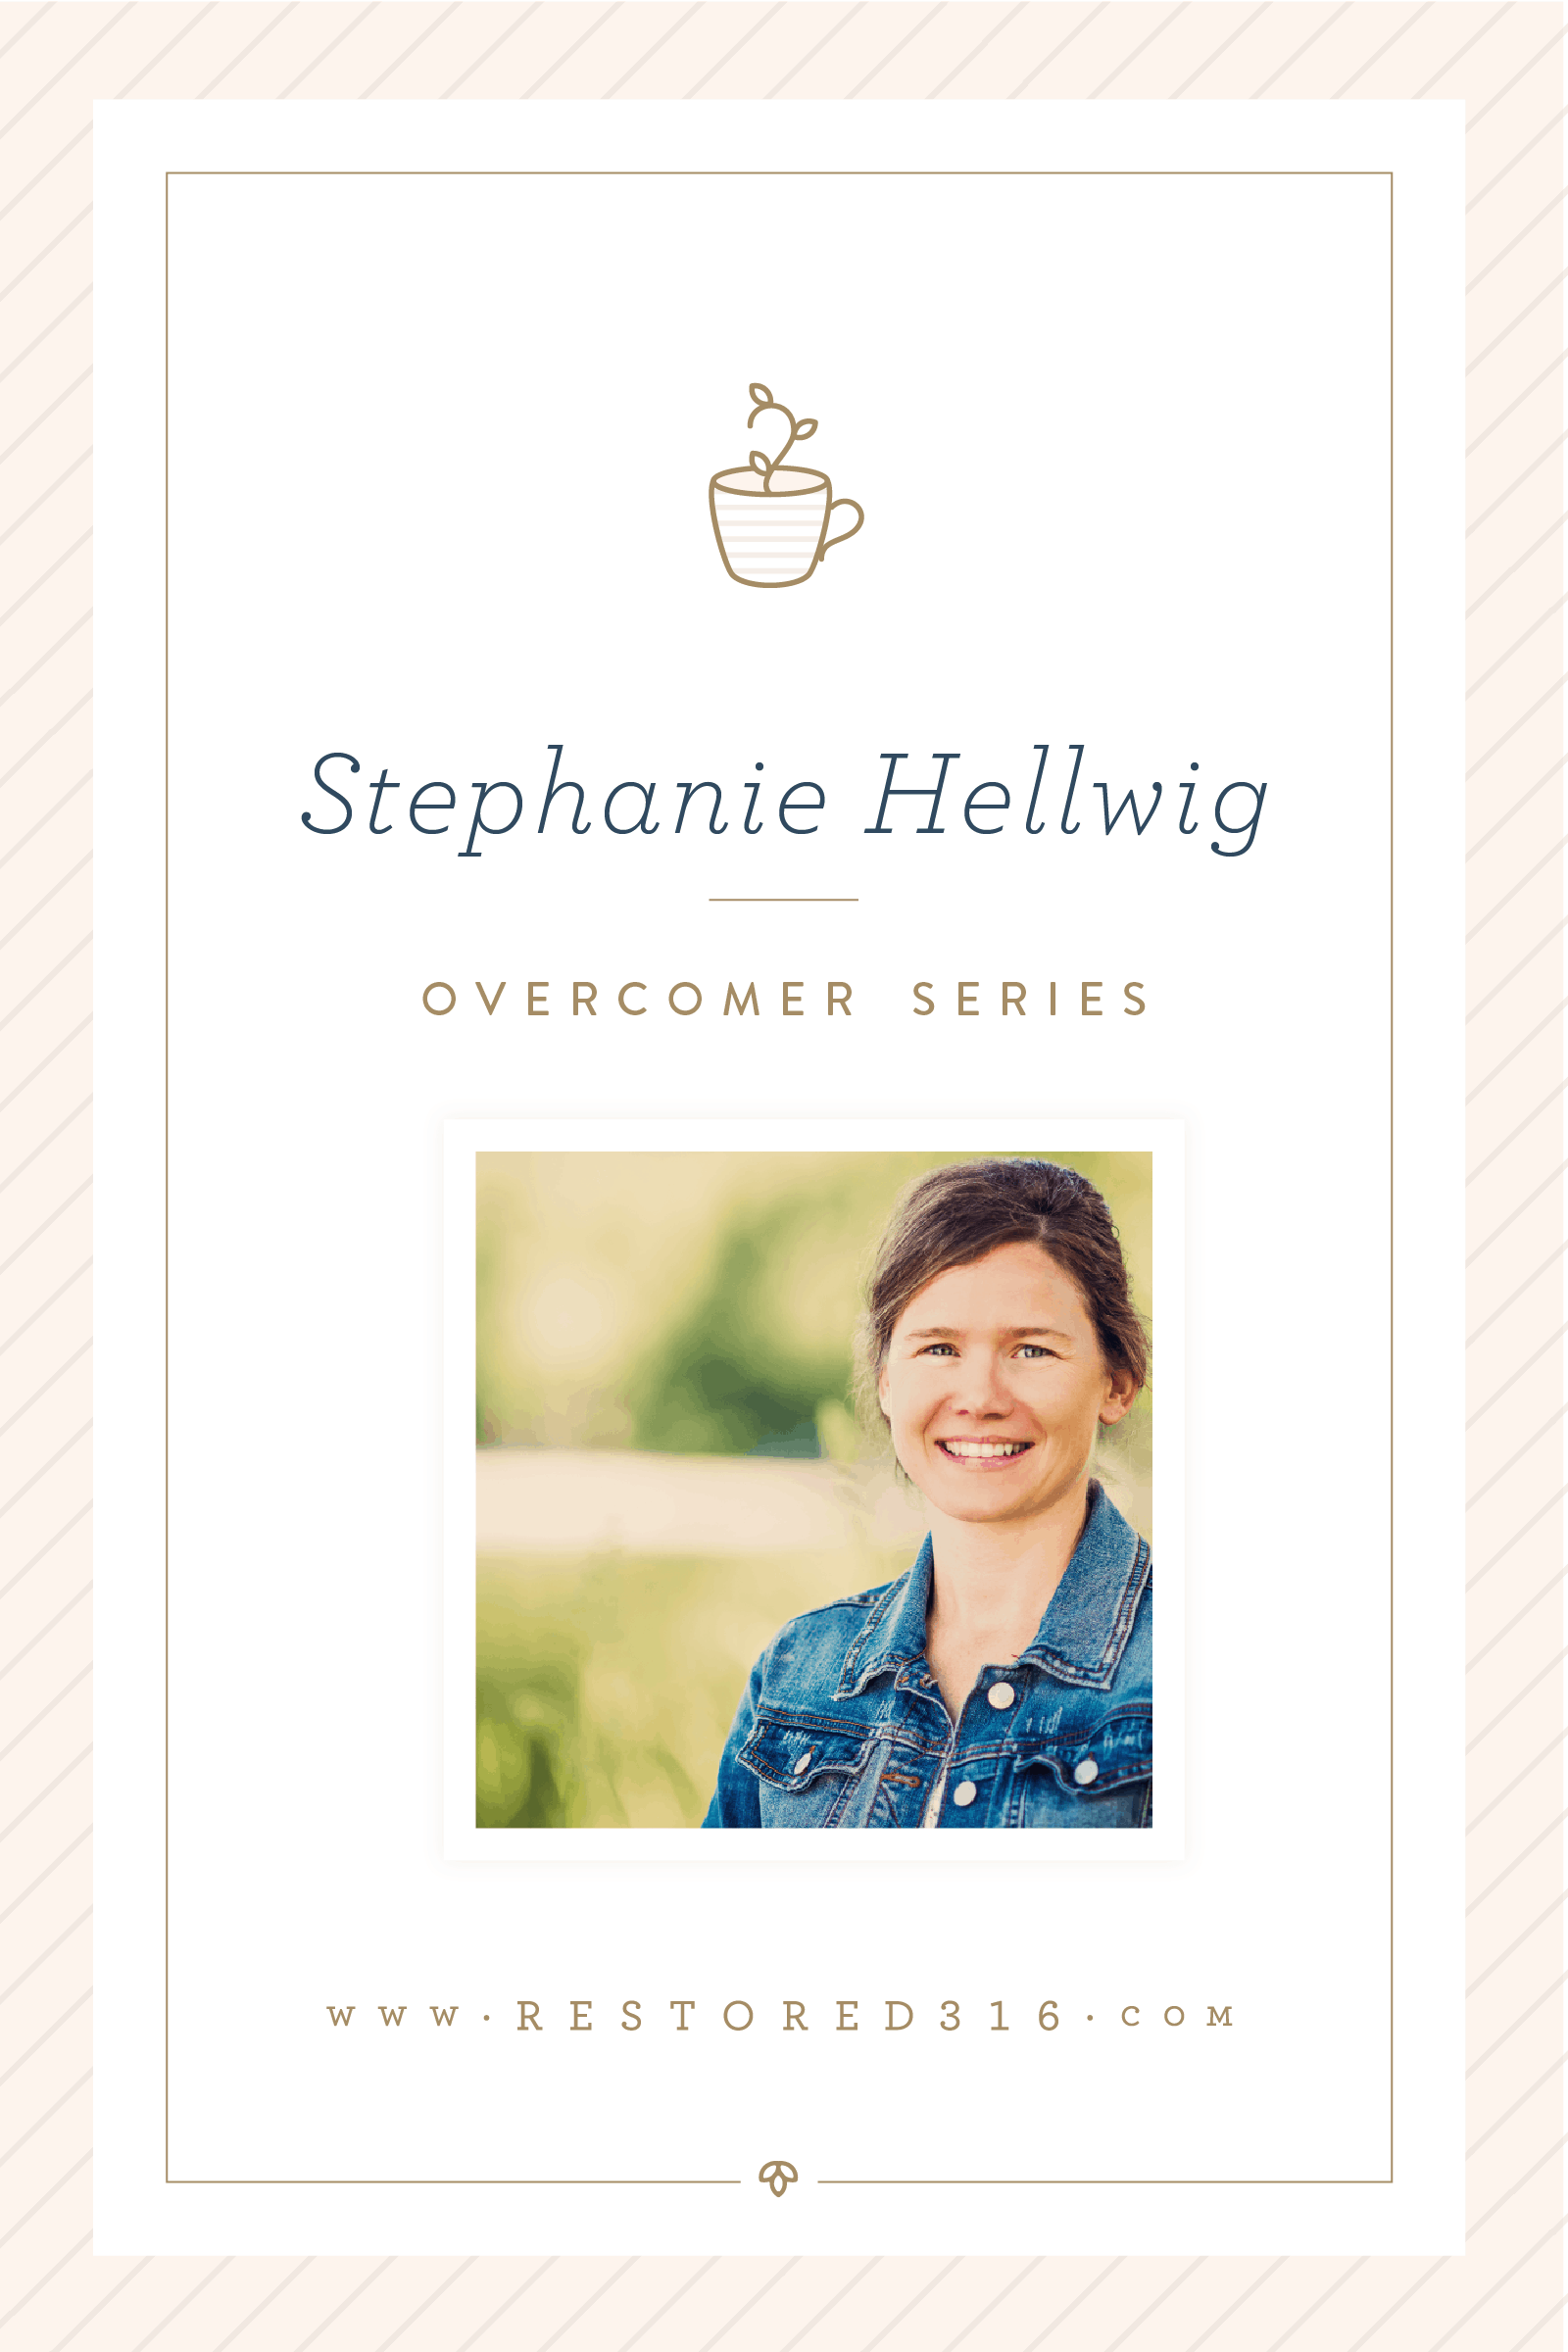 Overcomer Series with Stephanie Hellwig